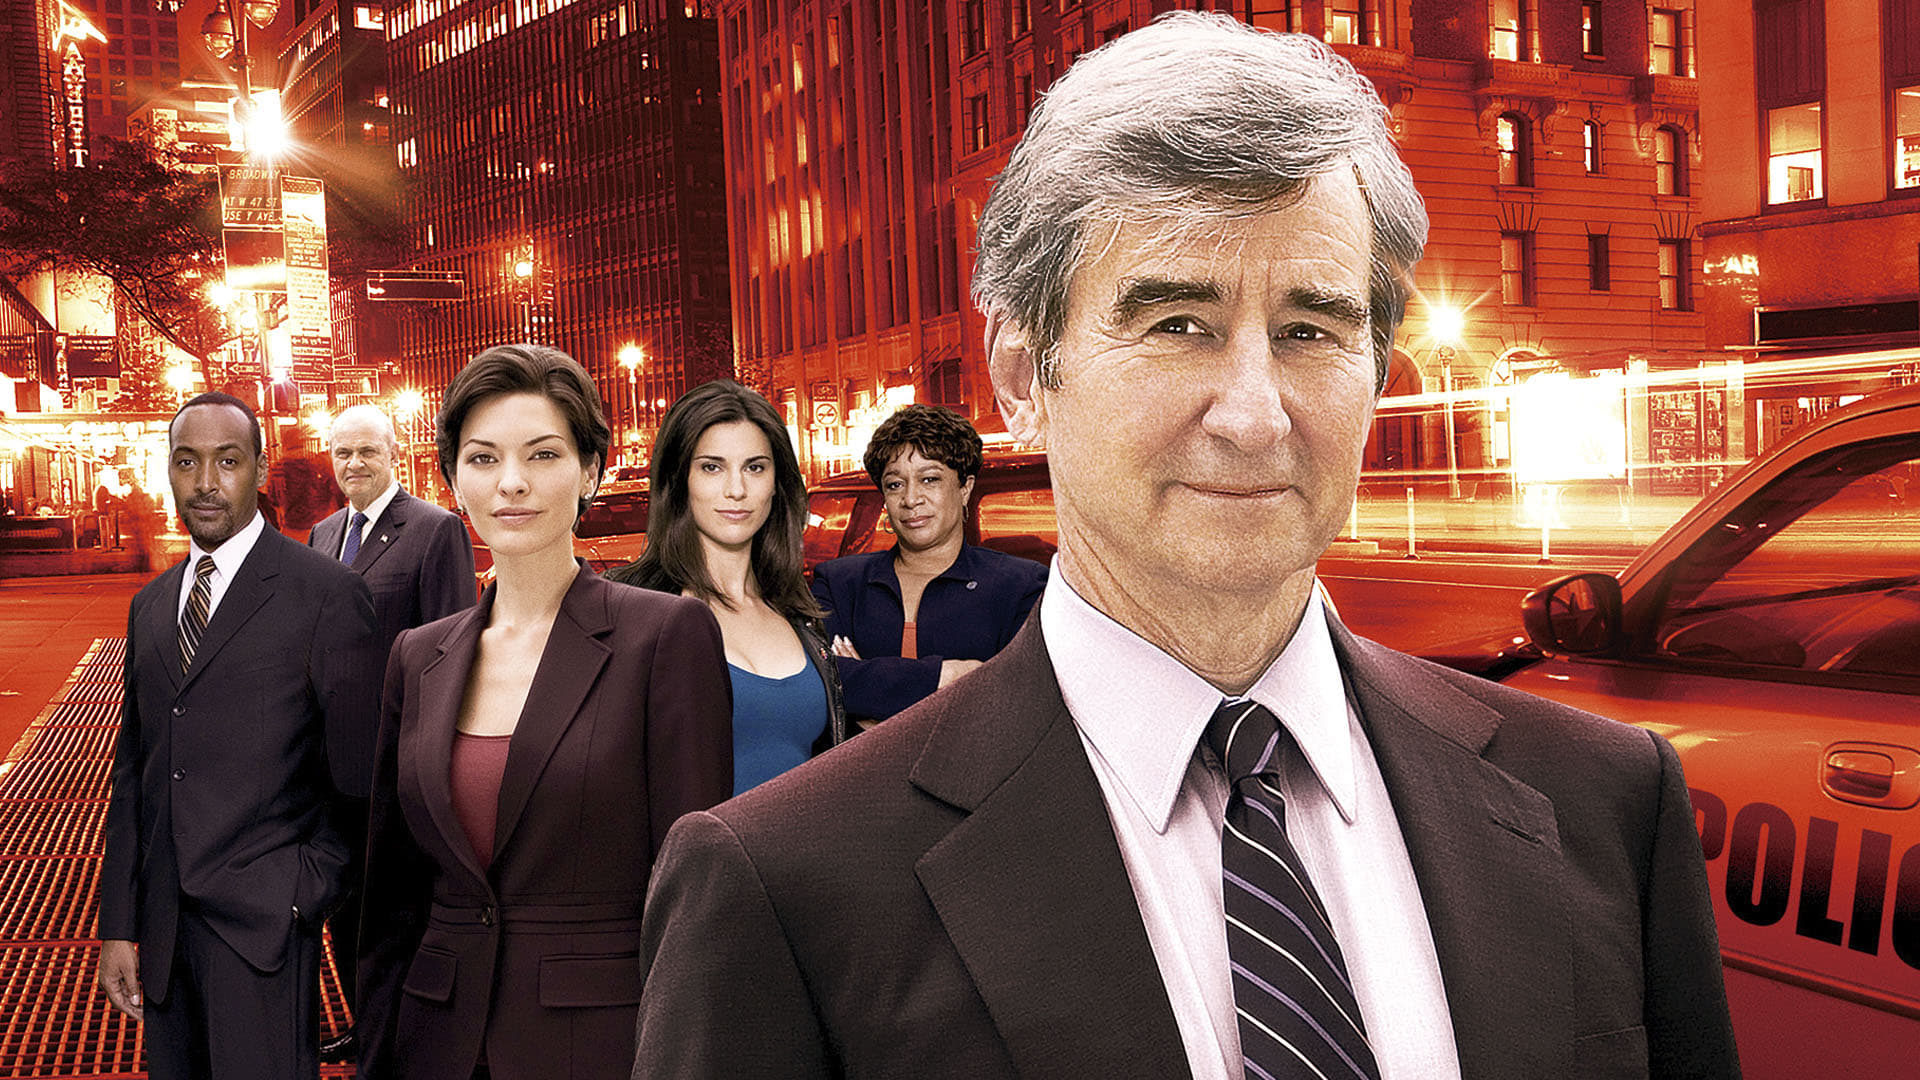 Law & Order - Season 17